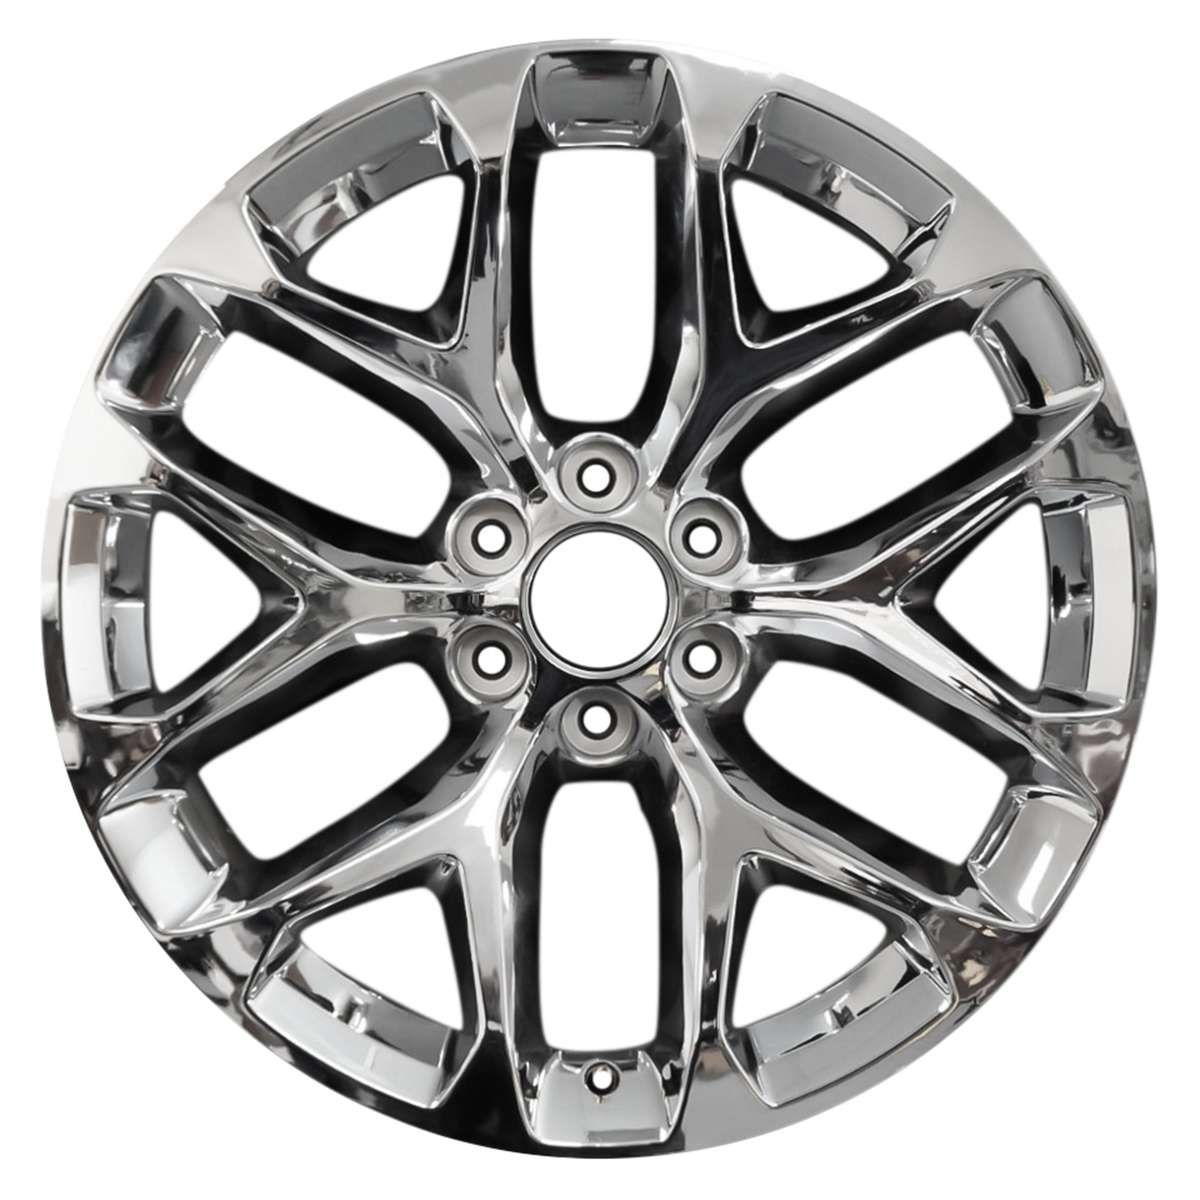 2014 Chevrolet Silverado 1500 New 22" Replacement Wheel Rim RW5668CHR